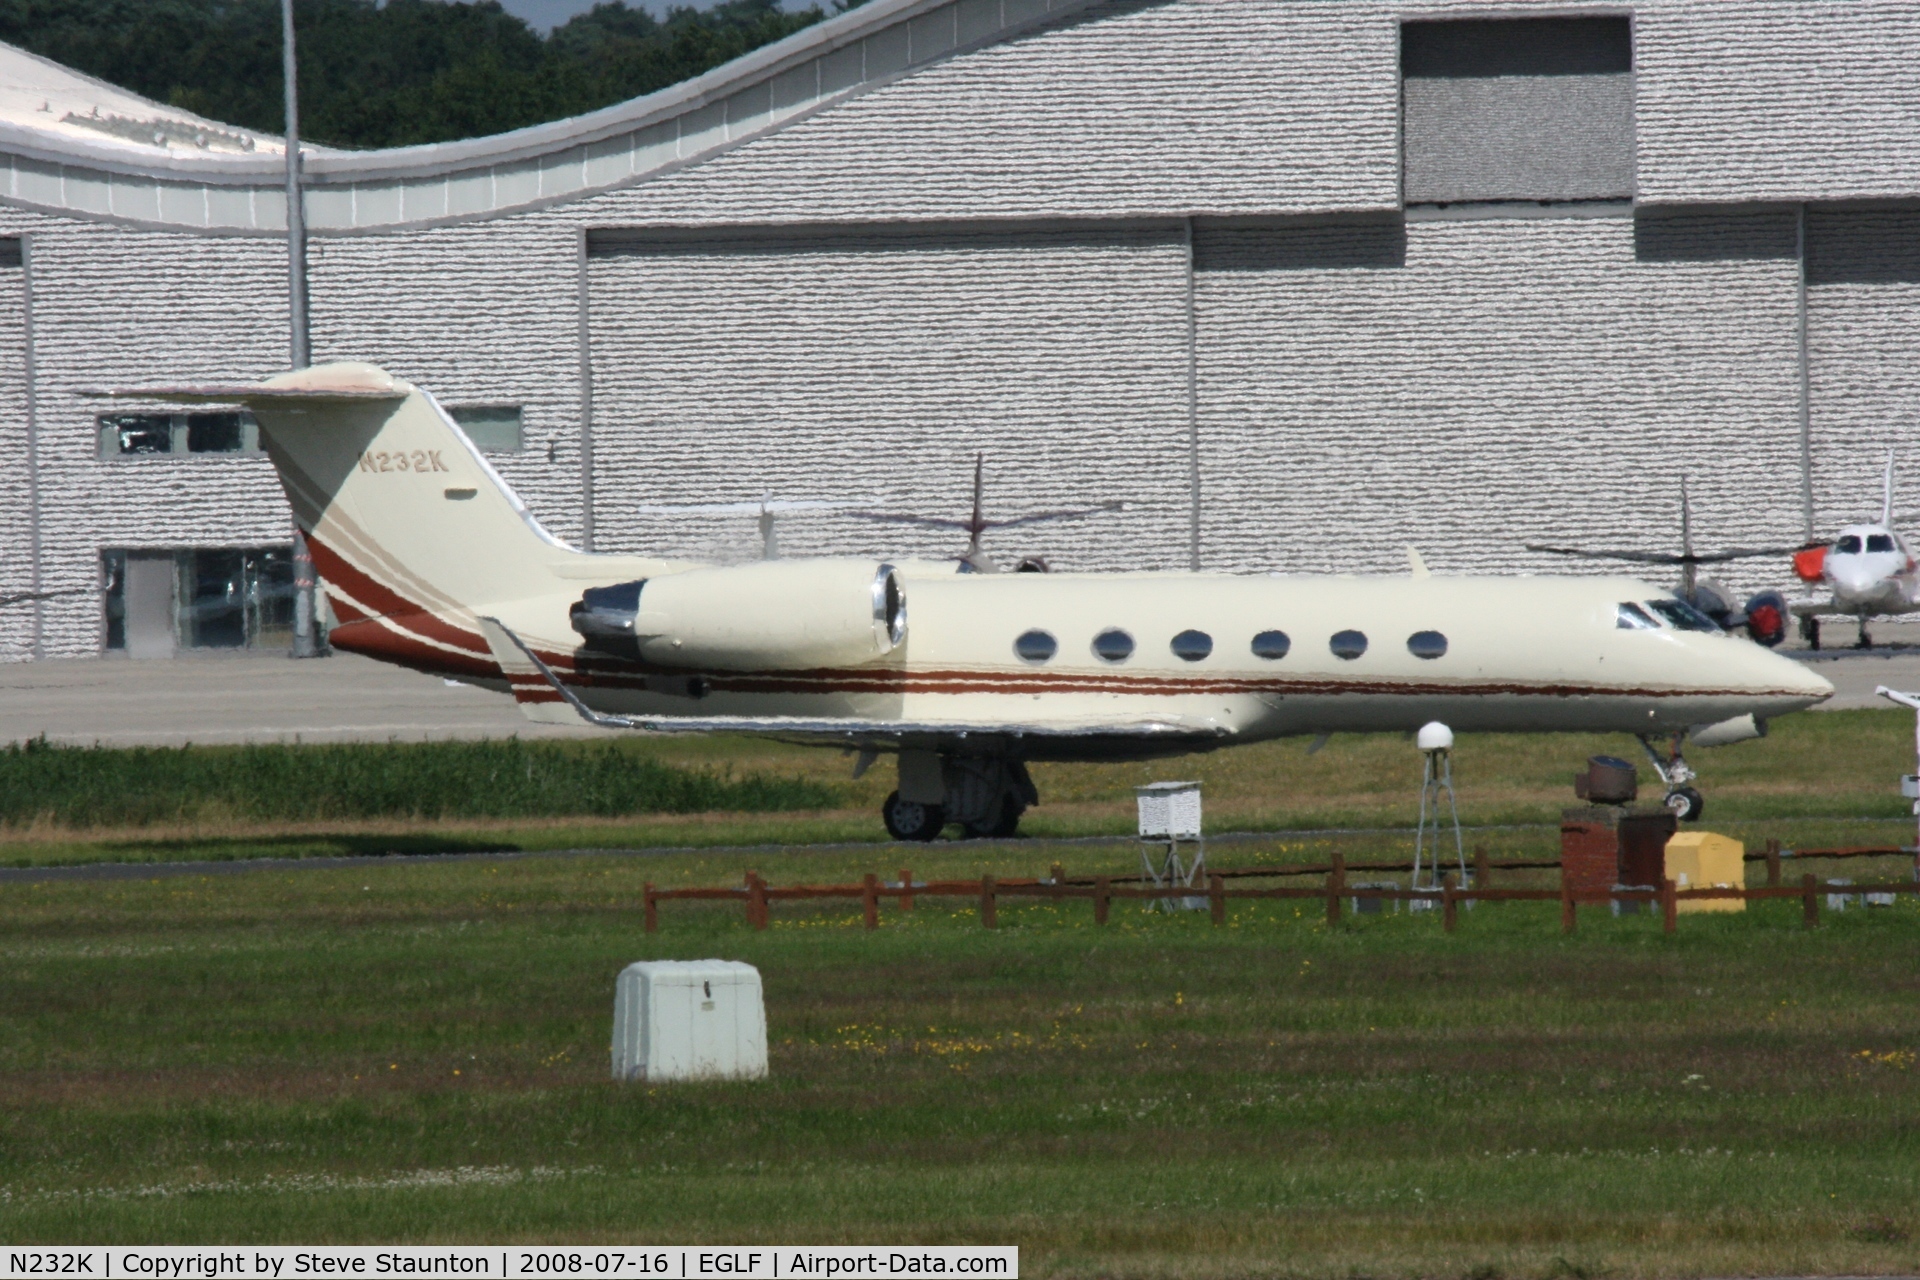 N232K, 1993 Gulfstream Aerospace G-IV C/N 1232, Taken at Farnborough Airshow on the Wednesday trade day, 16th July 2009